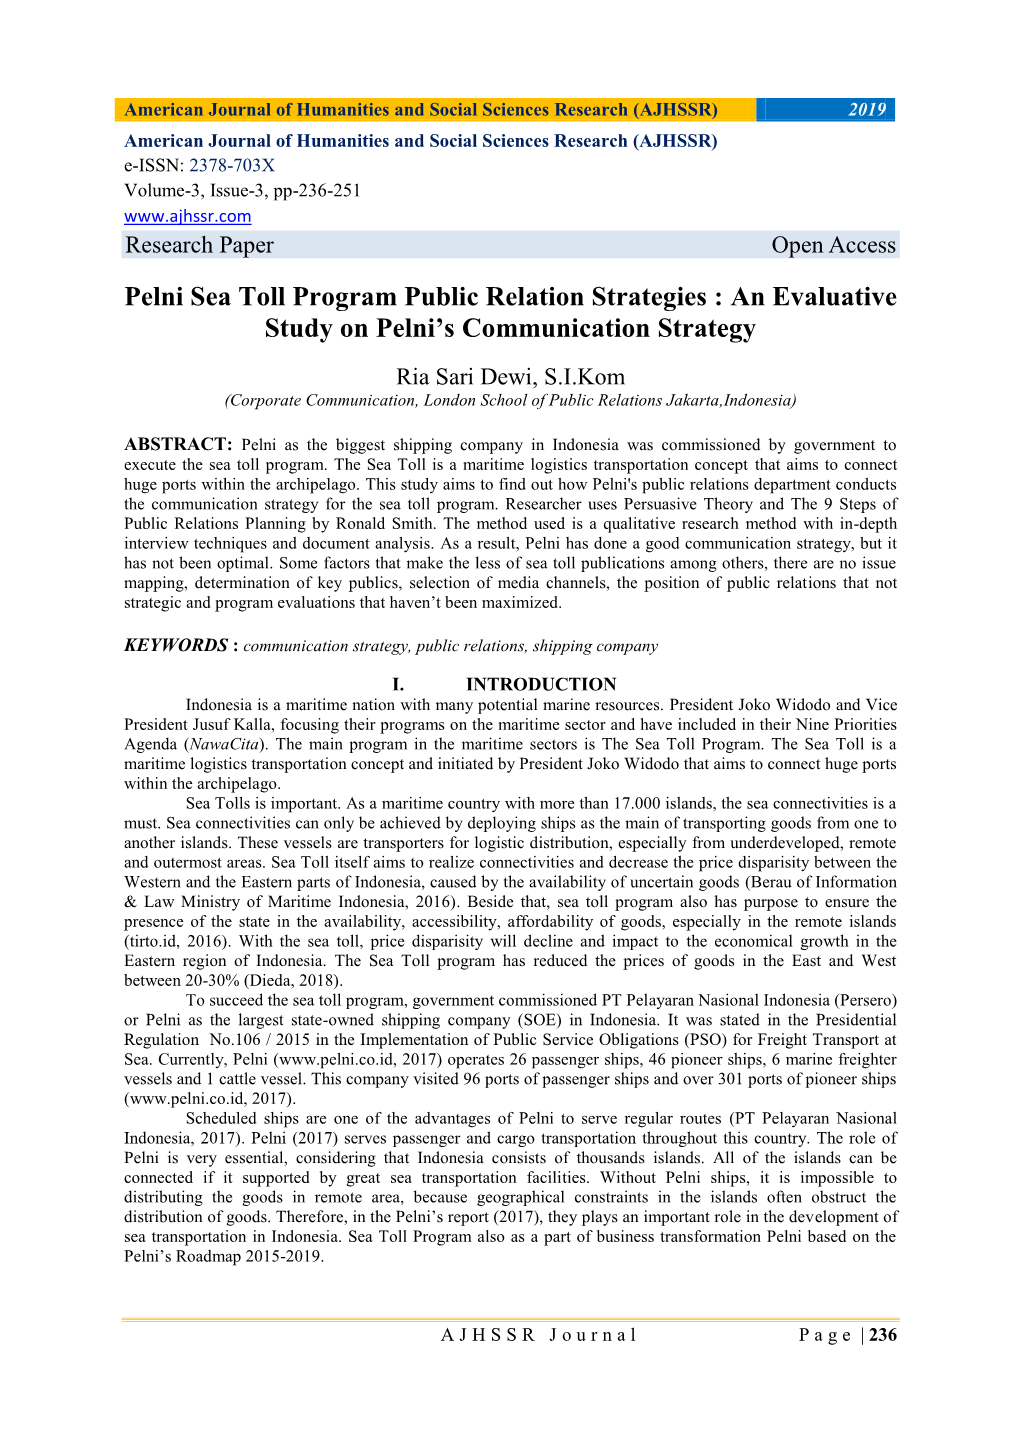 Pelni Sea Toll Program Public Relation Strategies : an Evaluative Study on Pelni’S Communication Strategy